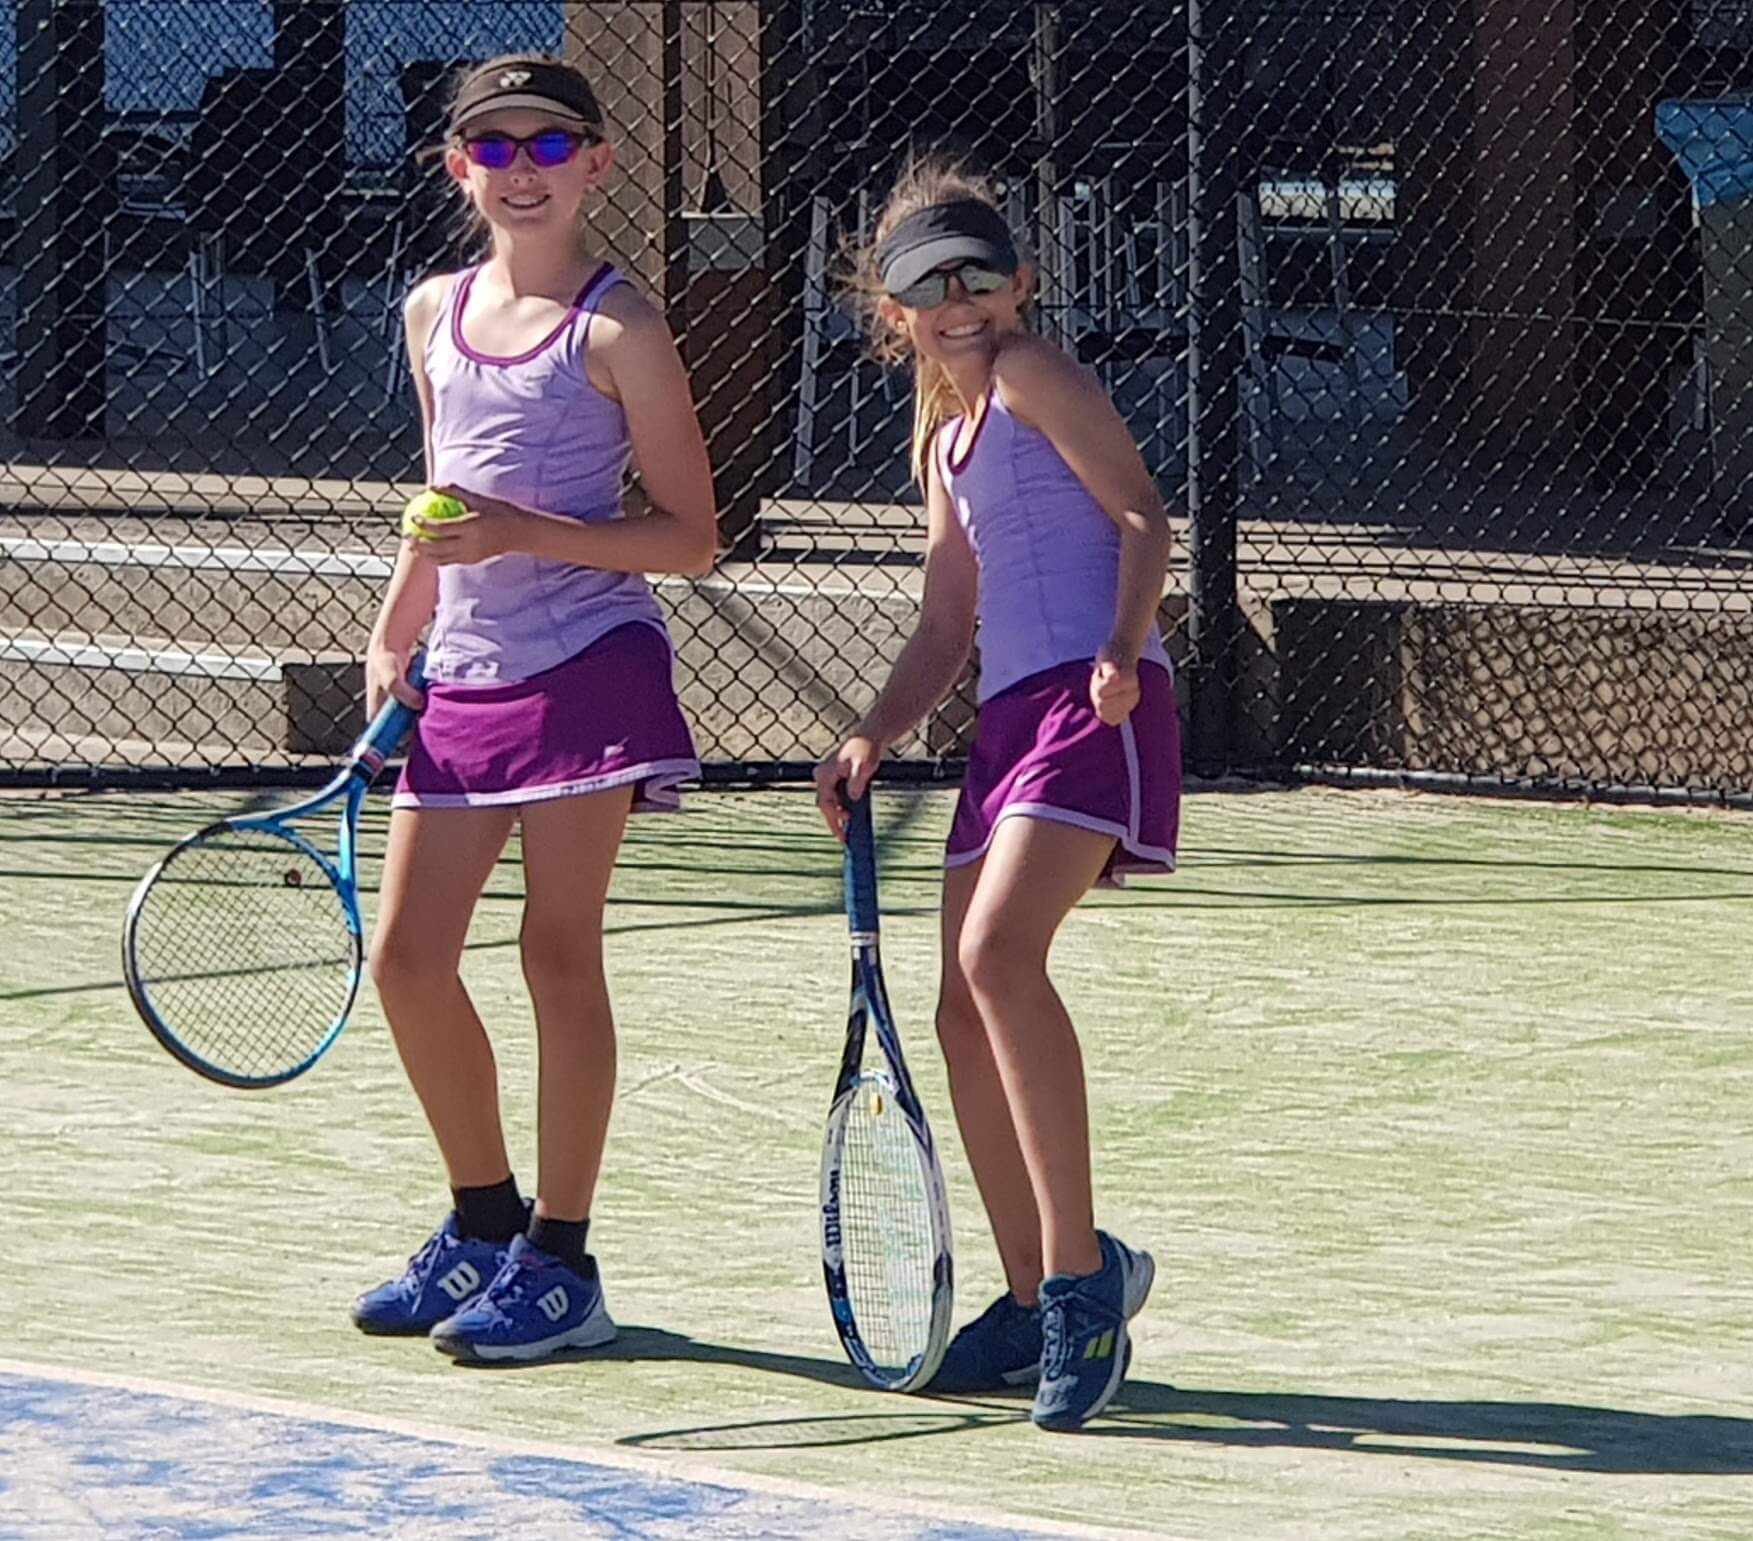 Girls in mataching tennis uniforms playing tennis on court